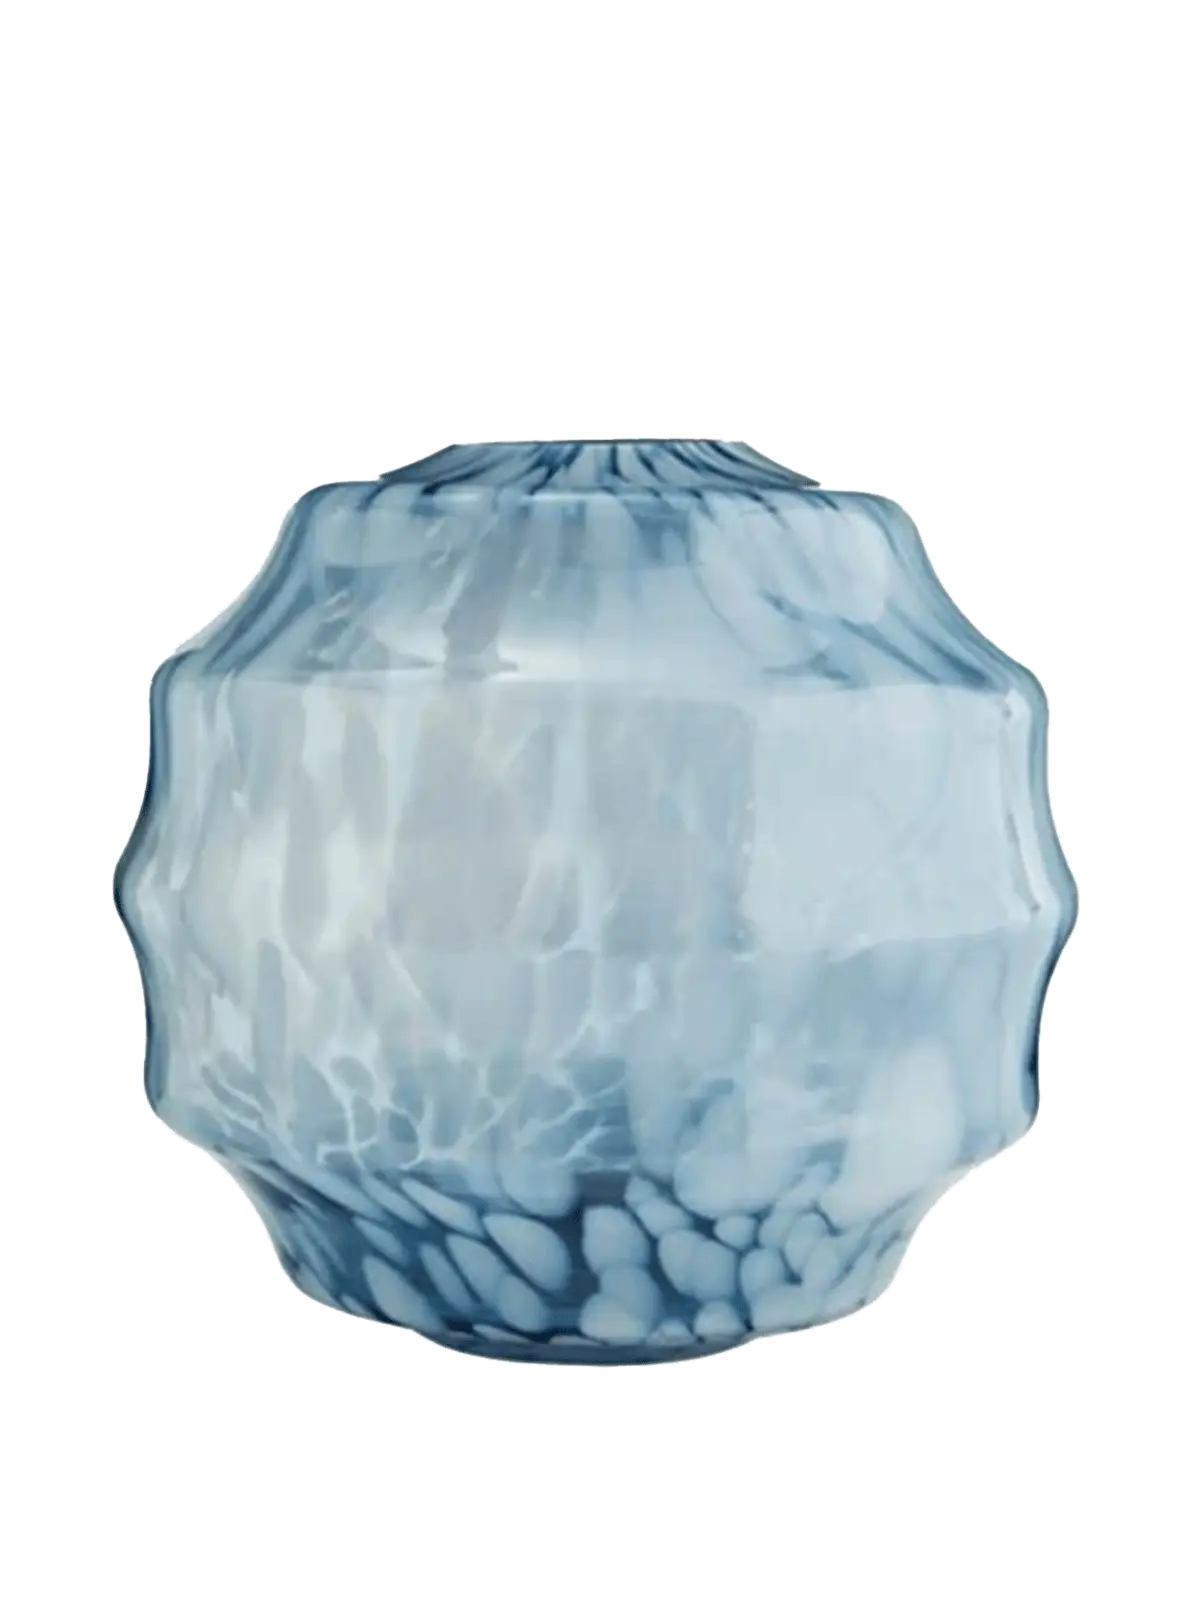 Blue/White Round Glass Vase Wooden Horse